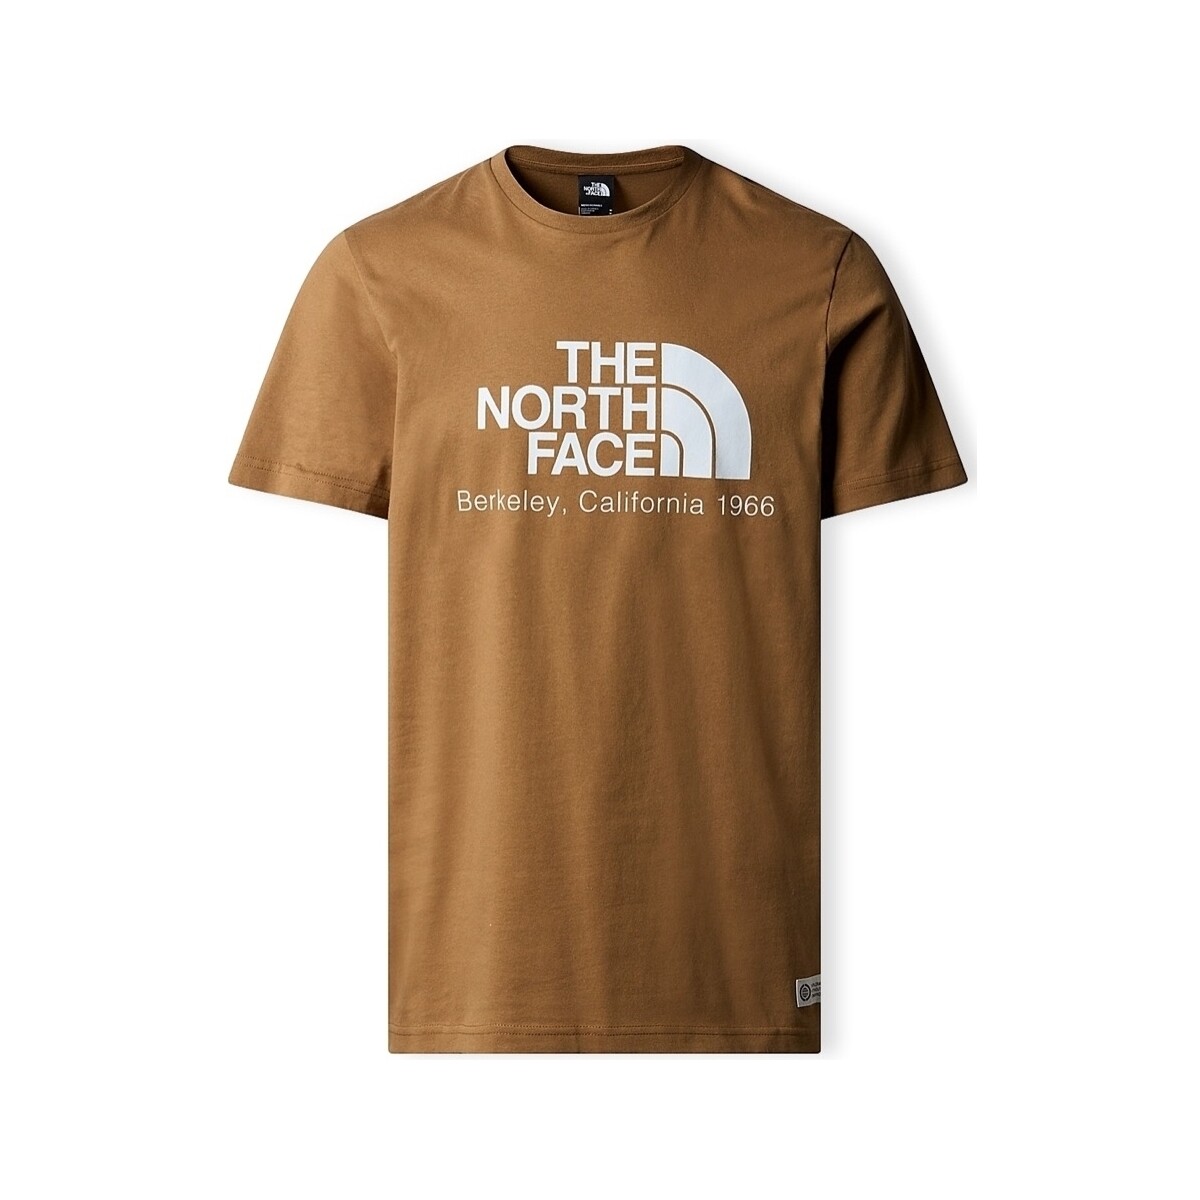 Ruhák Férfi Pólók / Galléros Pólók The North Face Berkeley California T-Shirt - Utility Brown Barna